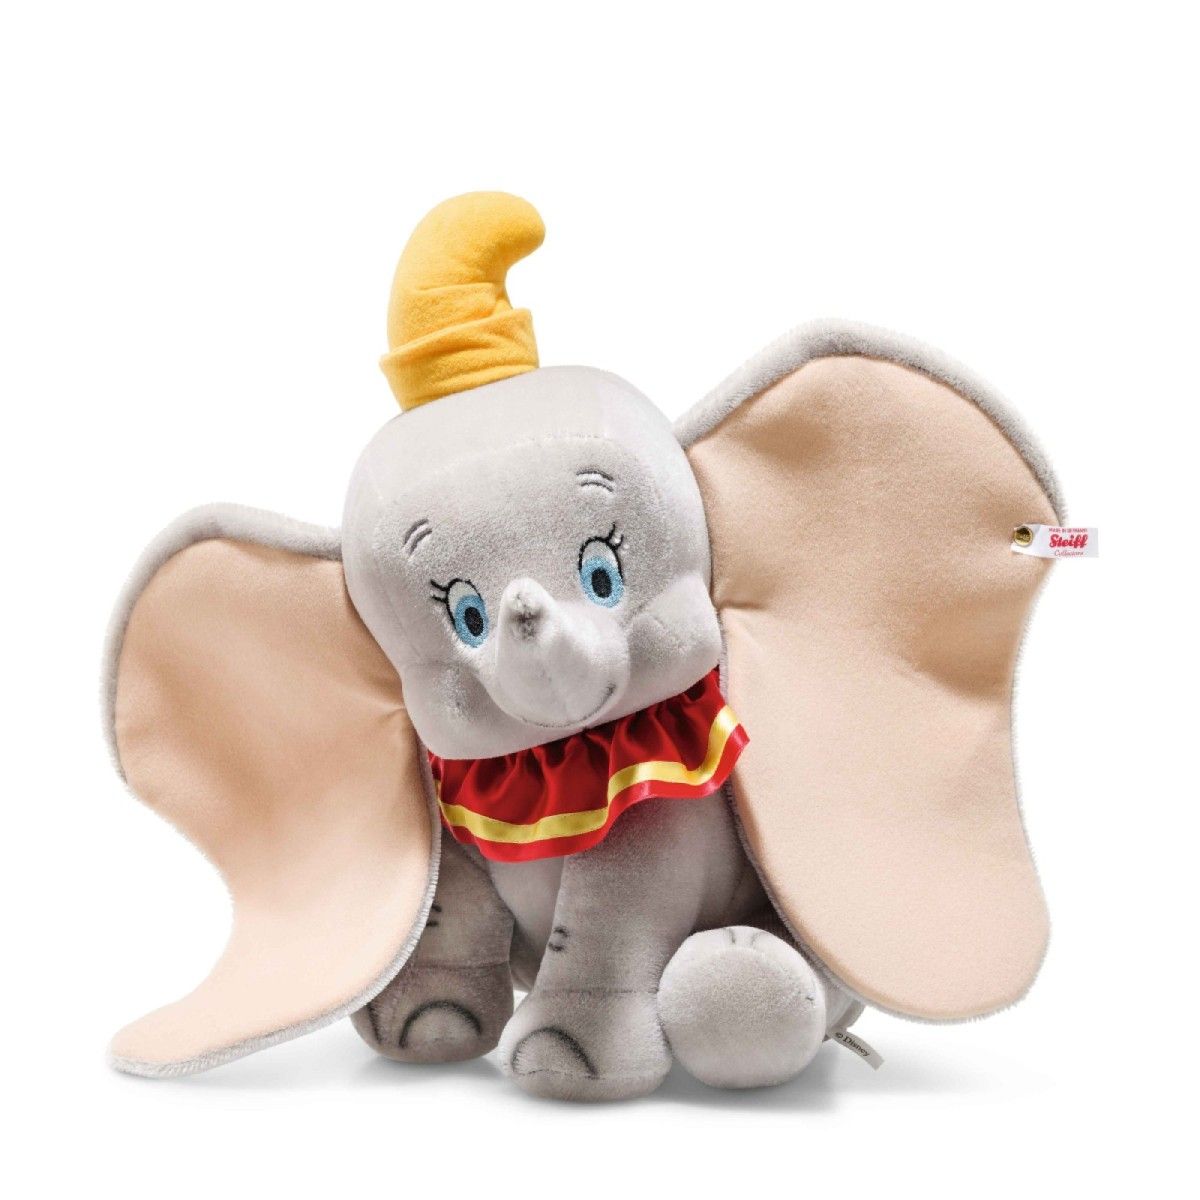 Steiff Disney Dumbo the Elephant Large 35cm 355547